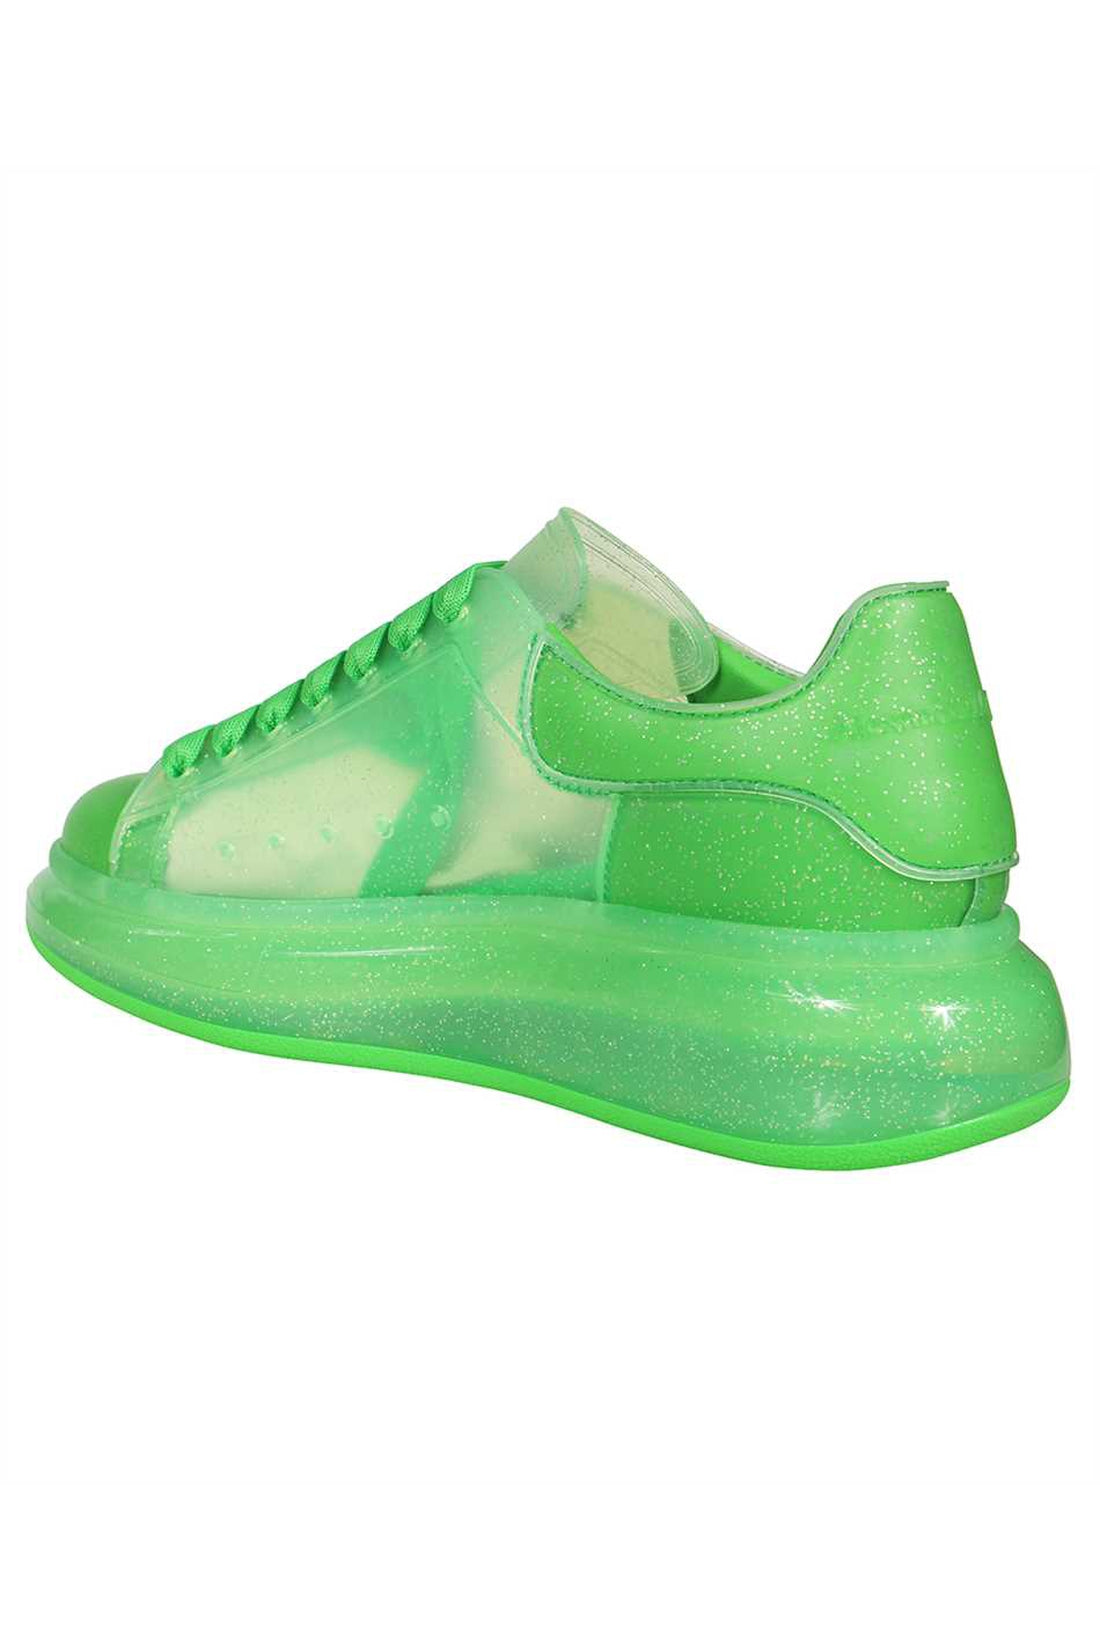 Alexander McQueen-OUTLET-SALE-Larry glittery rubber sneakers-ARCHIVIST